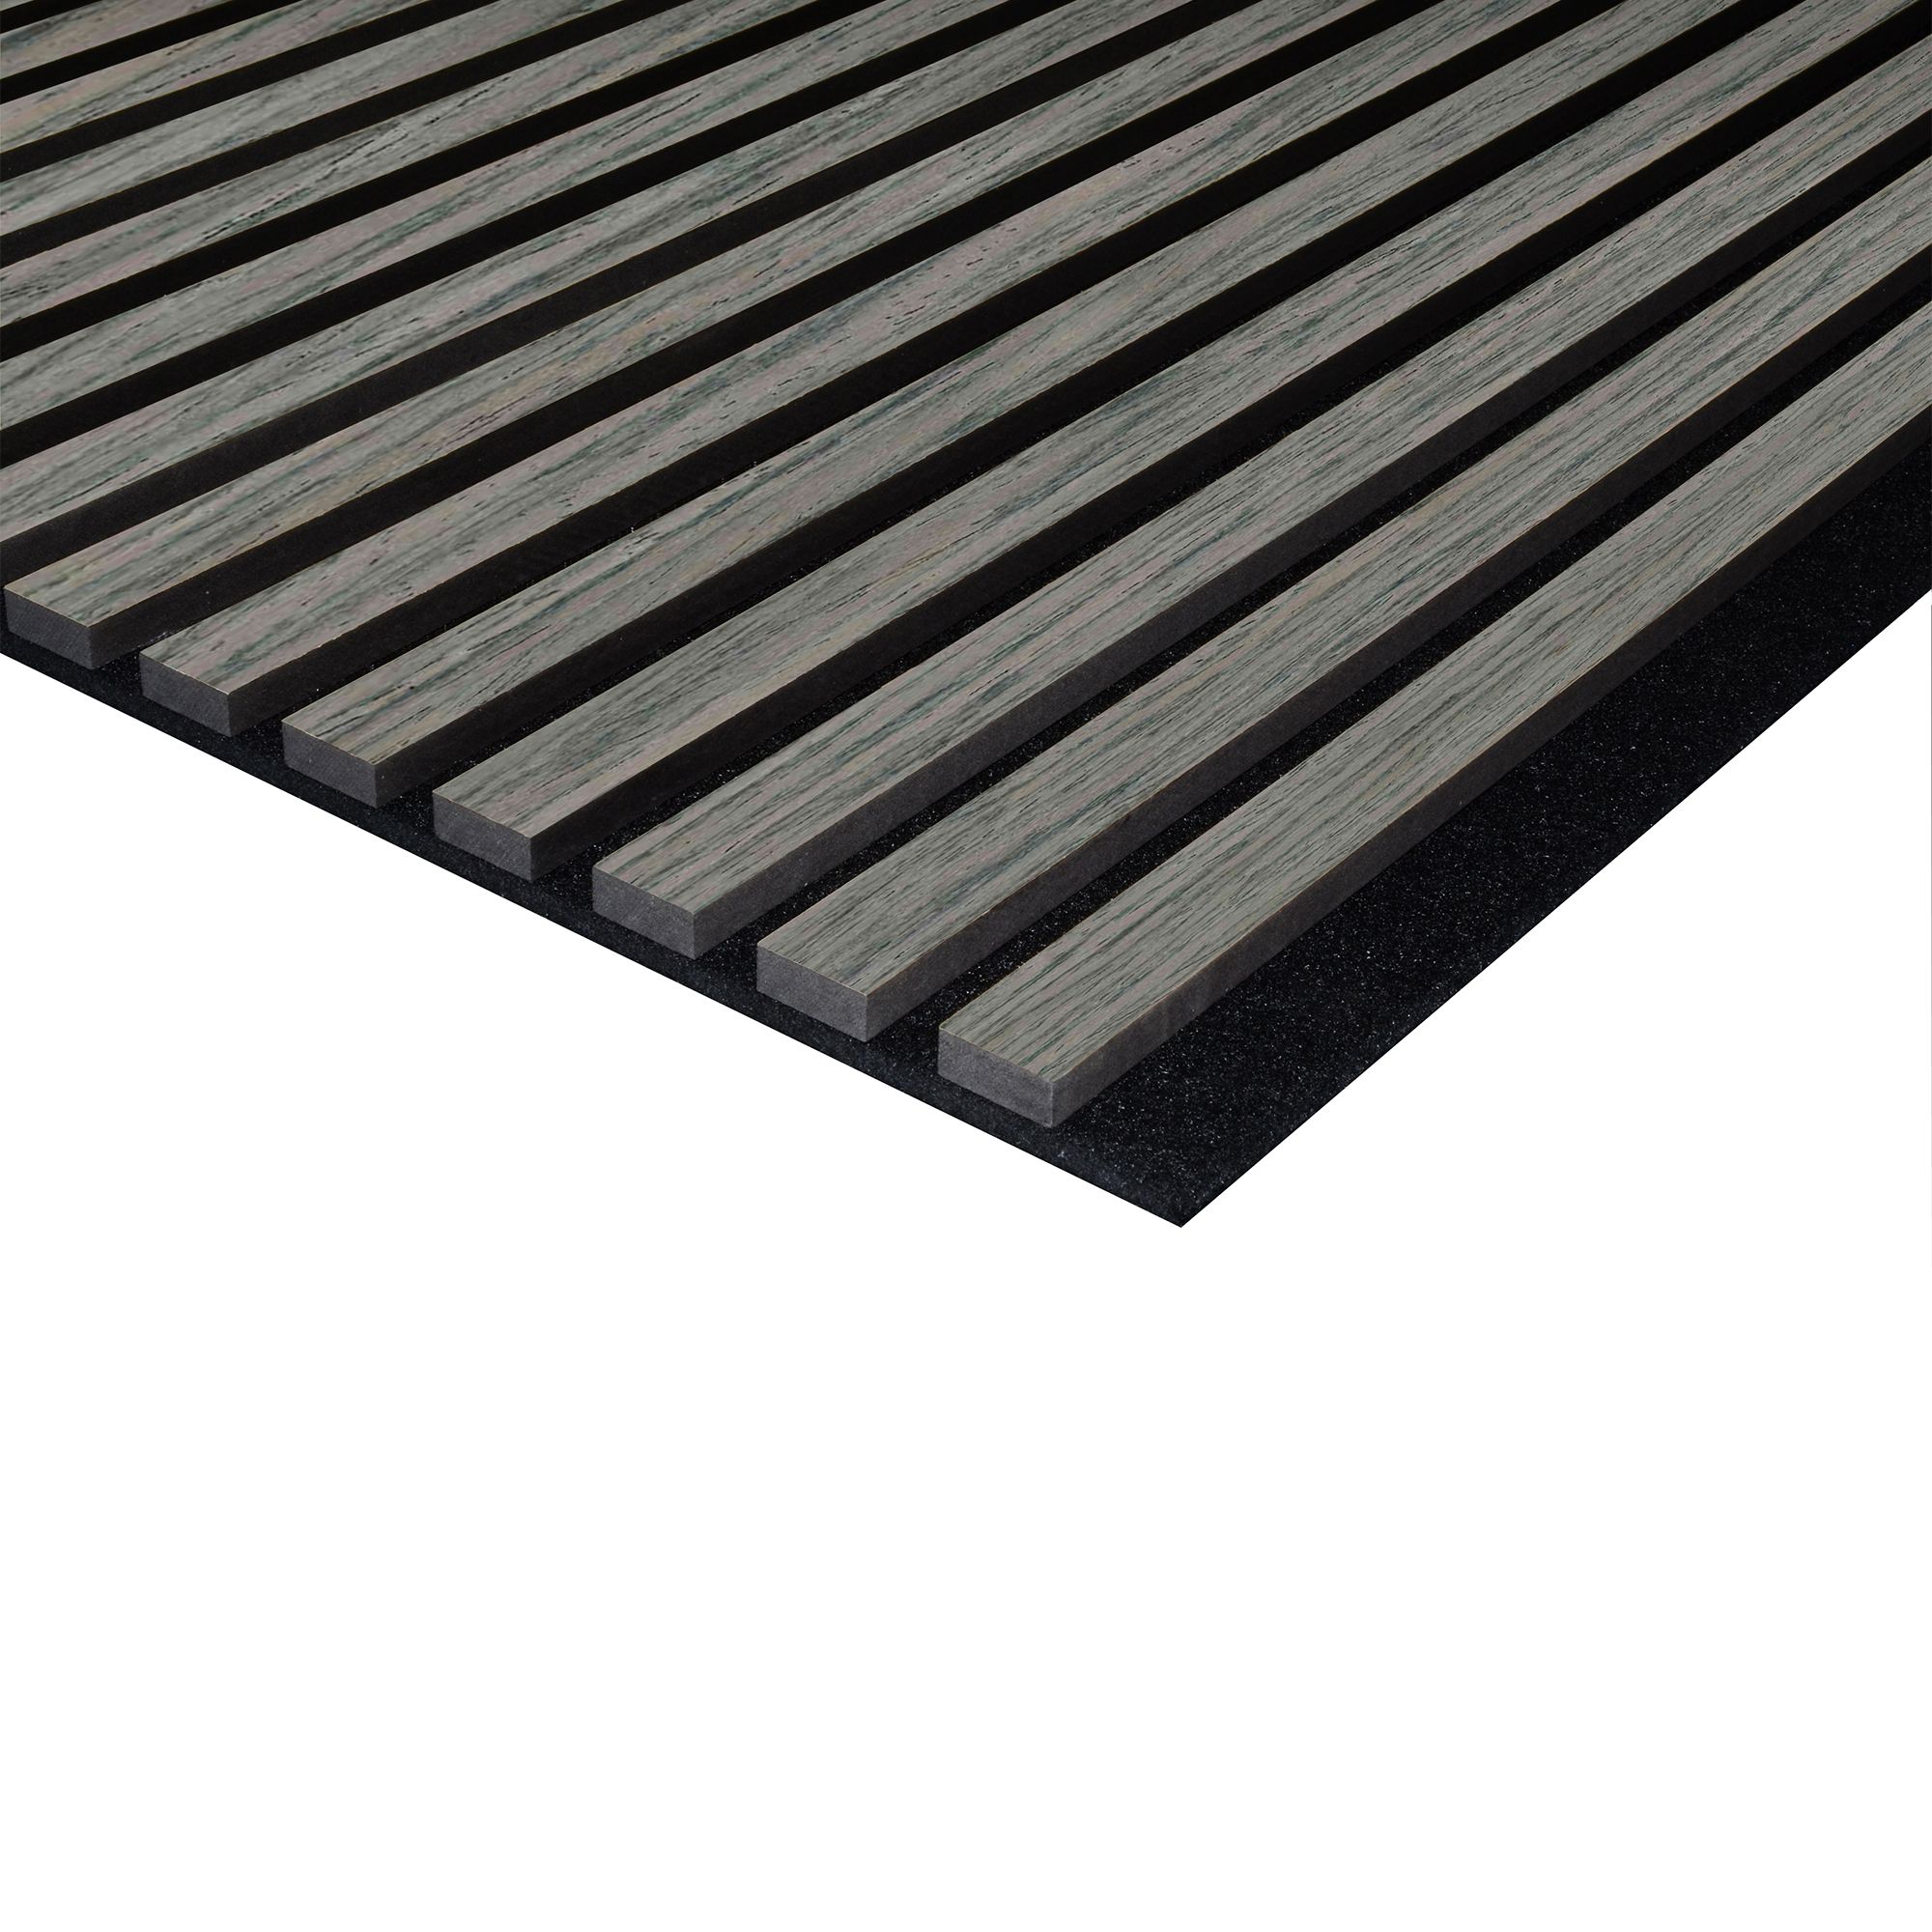 Neuhofer Grey Oak veneer Acoustic panel (L)2.4mm (W)572.5mm, 7.2kg